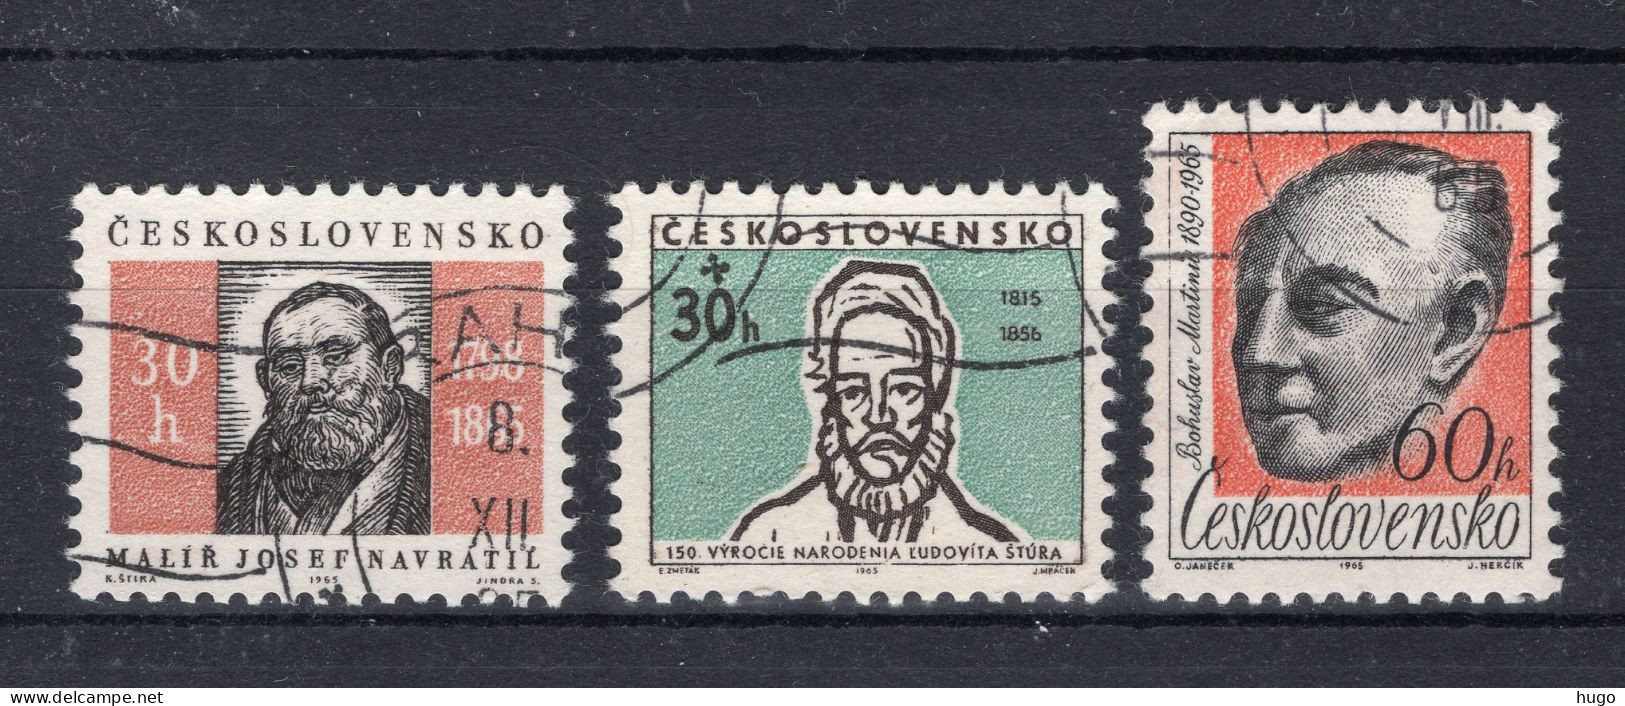 TSJECHOSLOVAKIJE Yt. 1426/1428° Gestempeld 1965 - Used Stamps